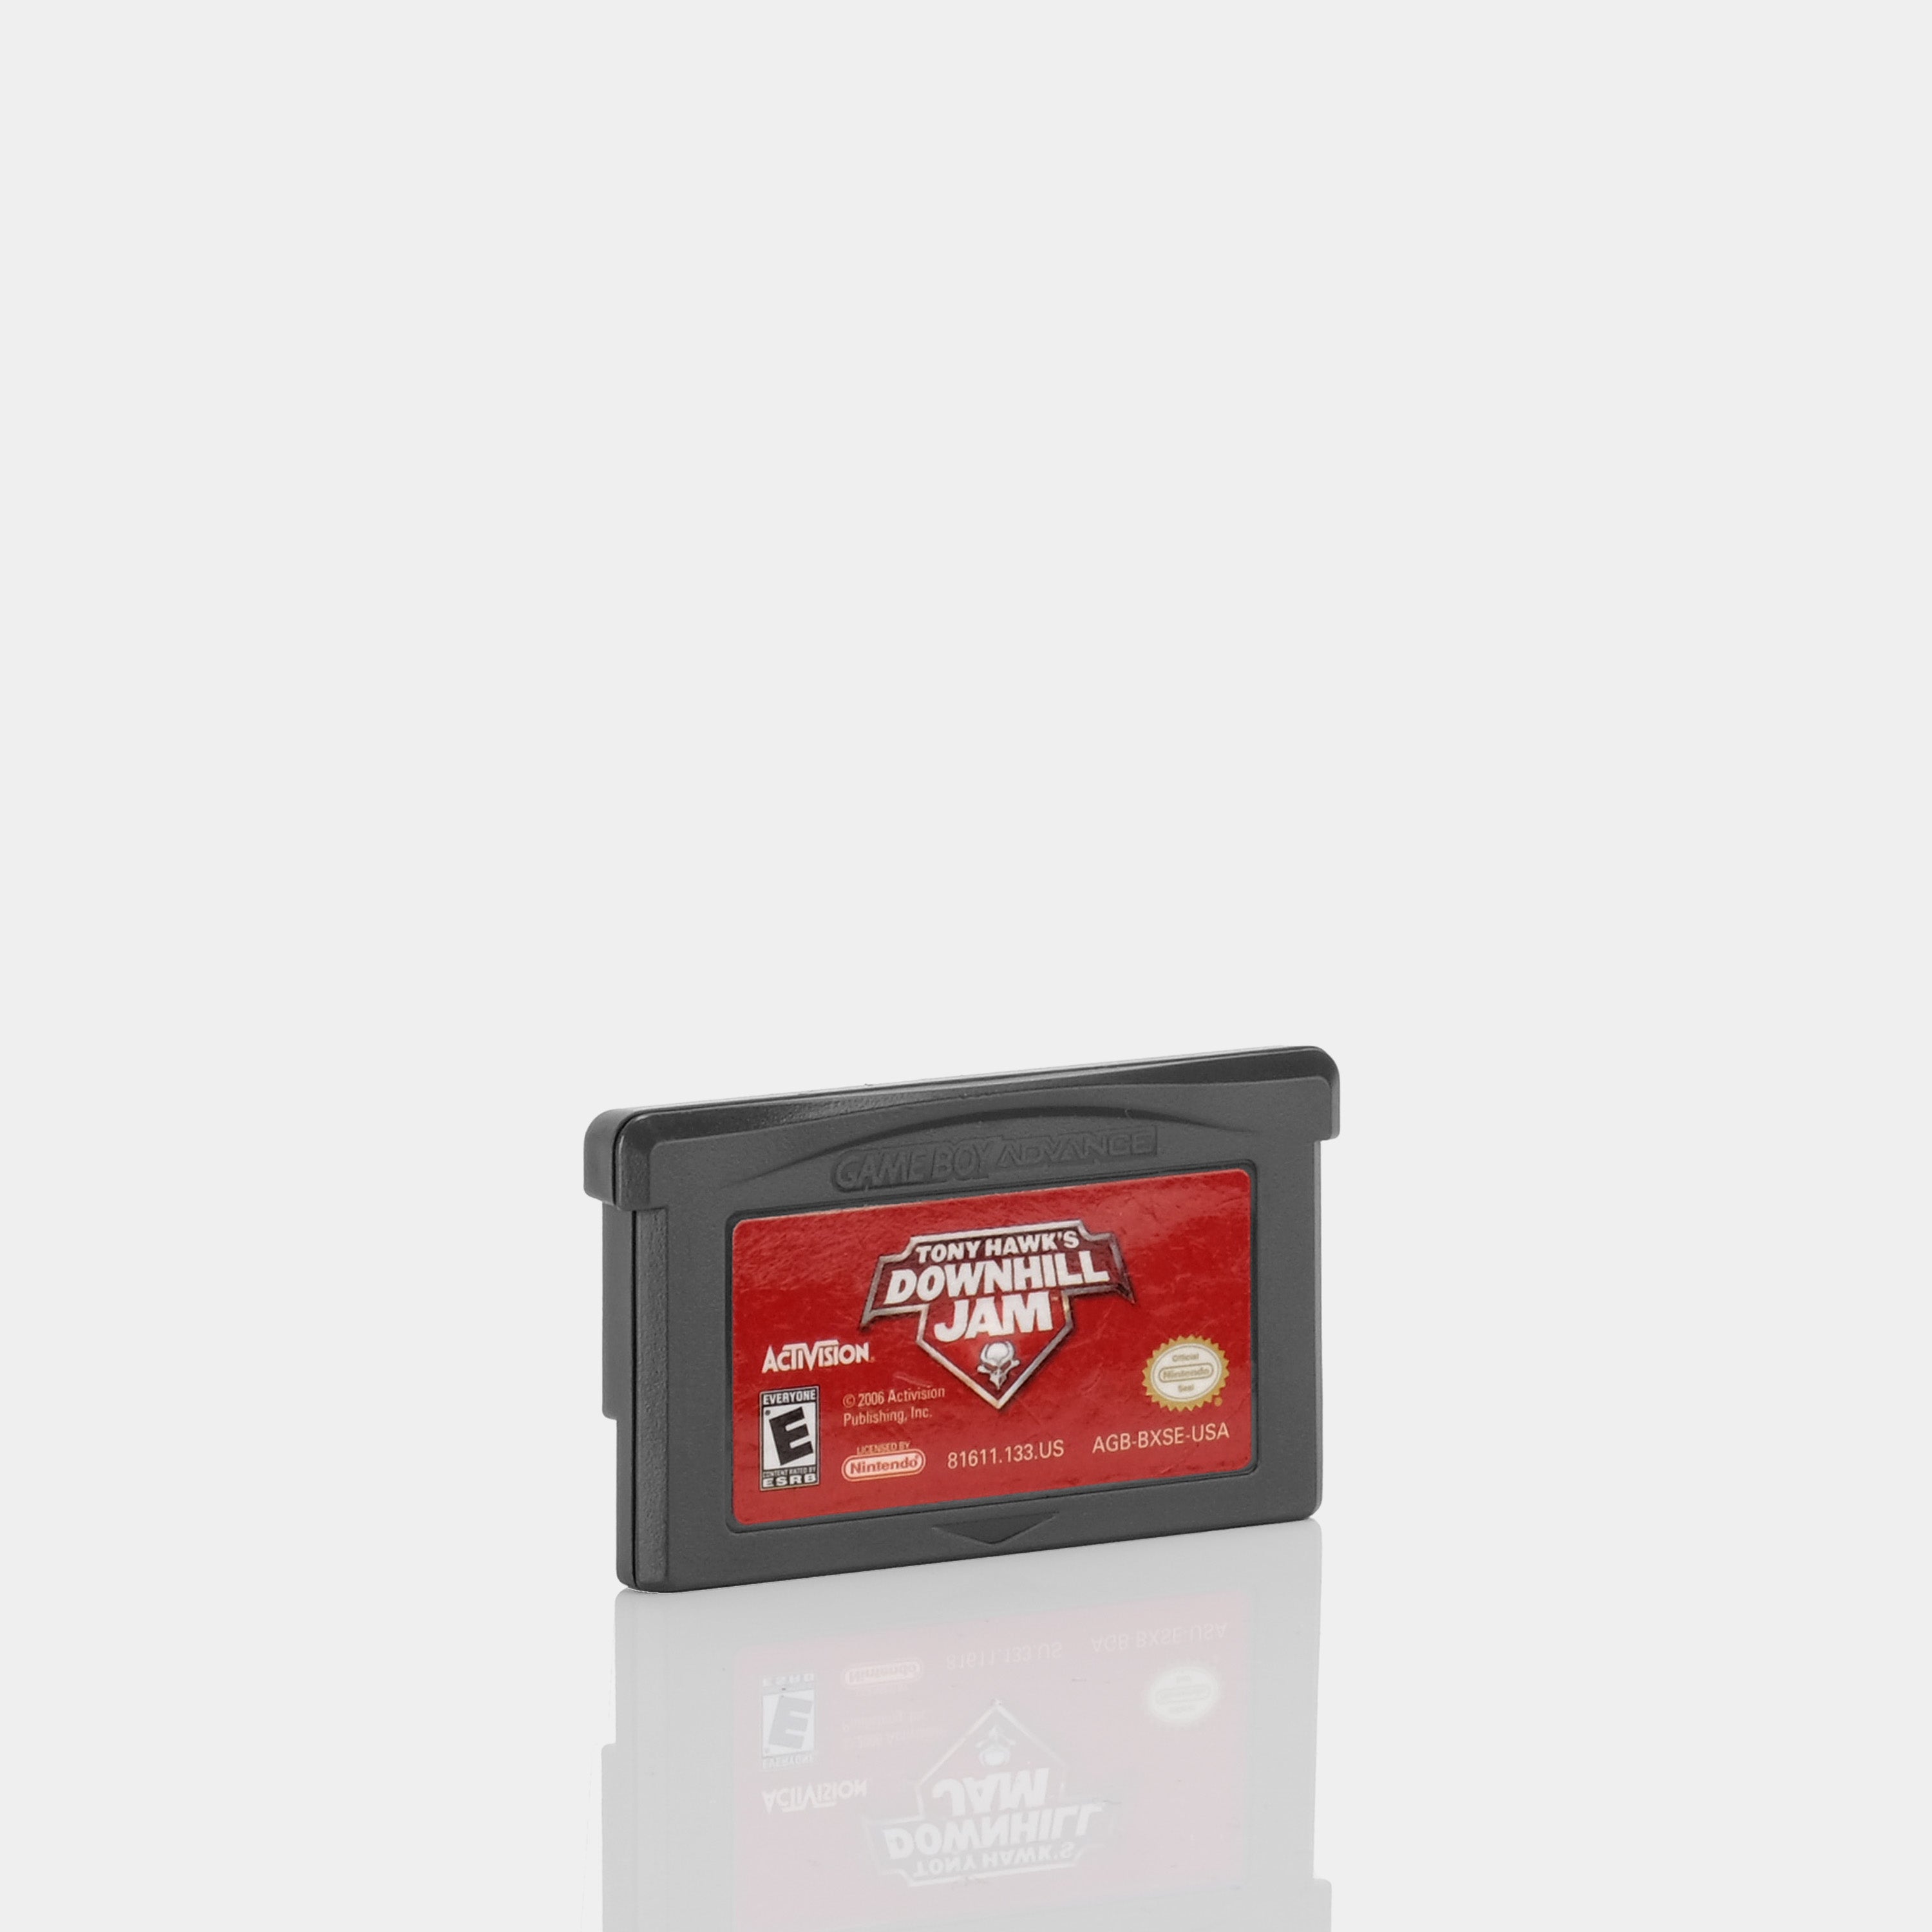 Tony Hawk's Downhill Jam Game Boy Advance Game